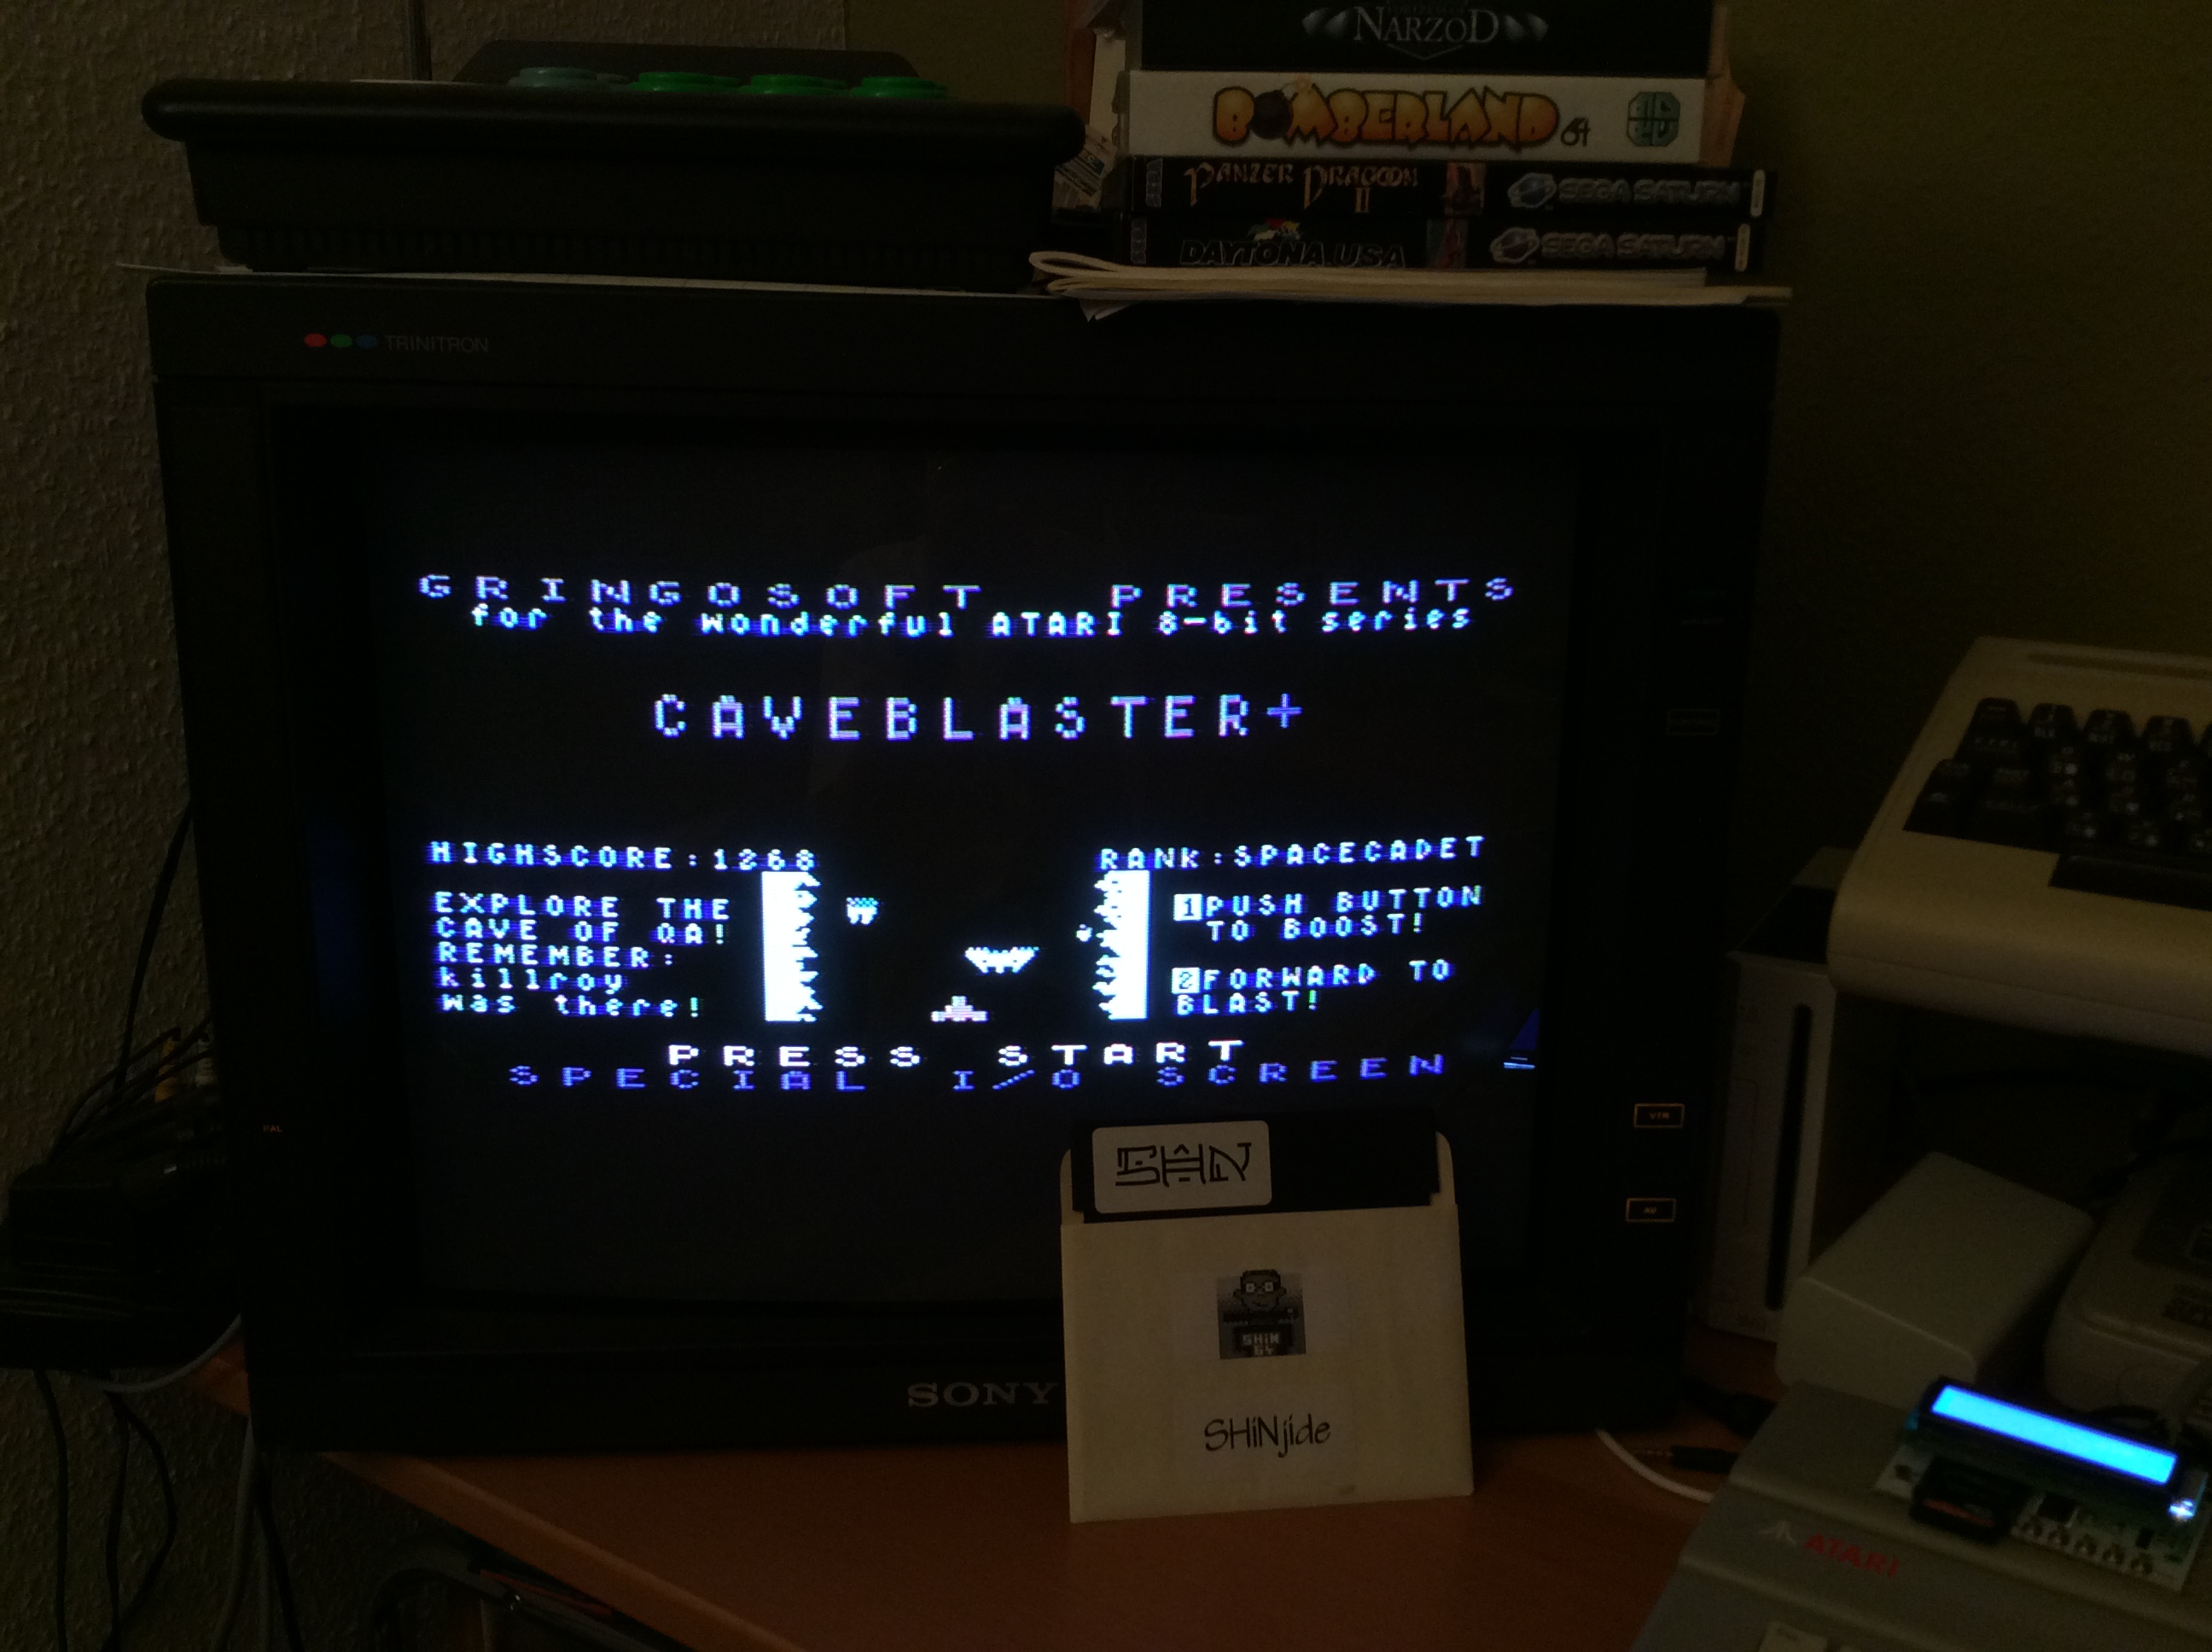 SHiNjide: Caveblaster + (Atari 400/800/XL/XE) 1,268 points on 2015-03-06 07:58:11